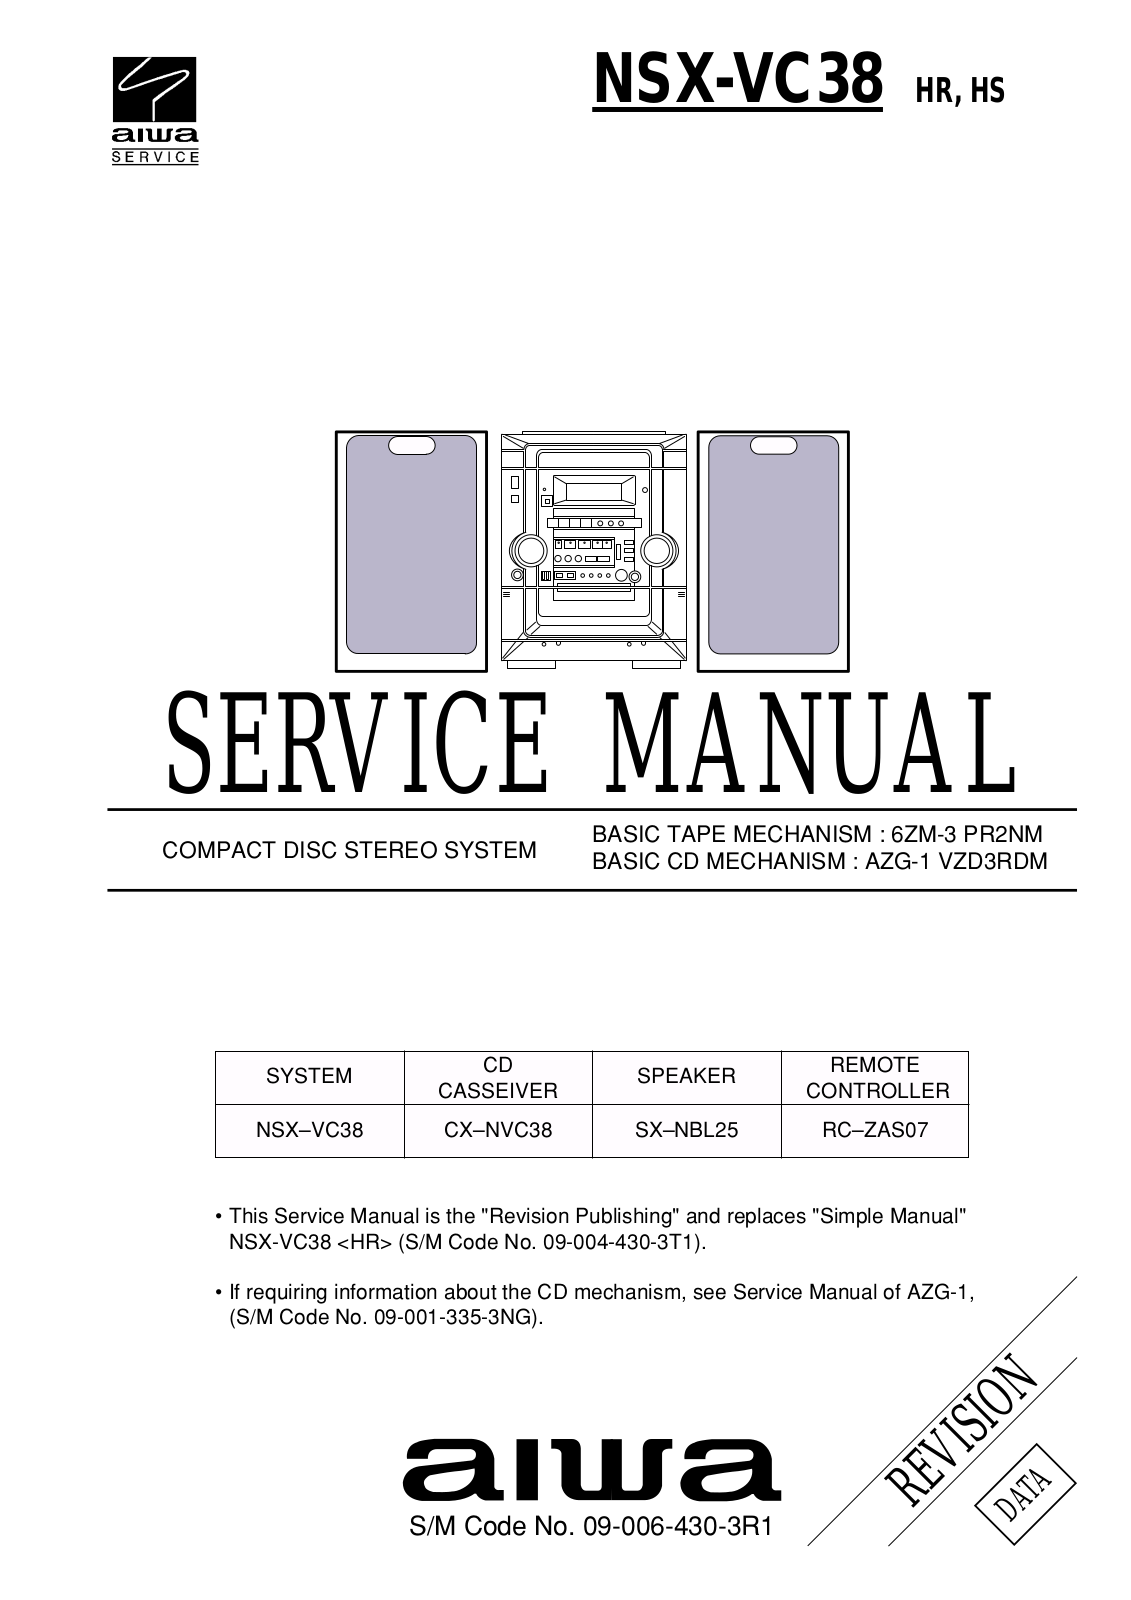 Aiwa NSX-VC38HR, NSX-VC38HS Service manual